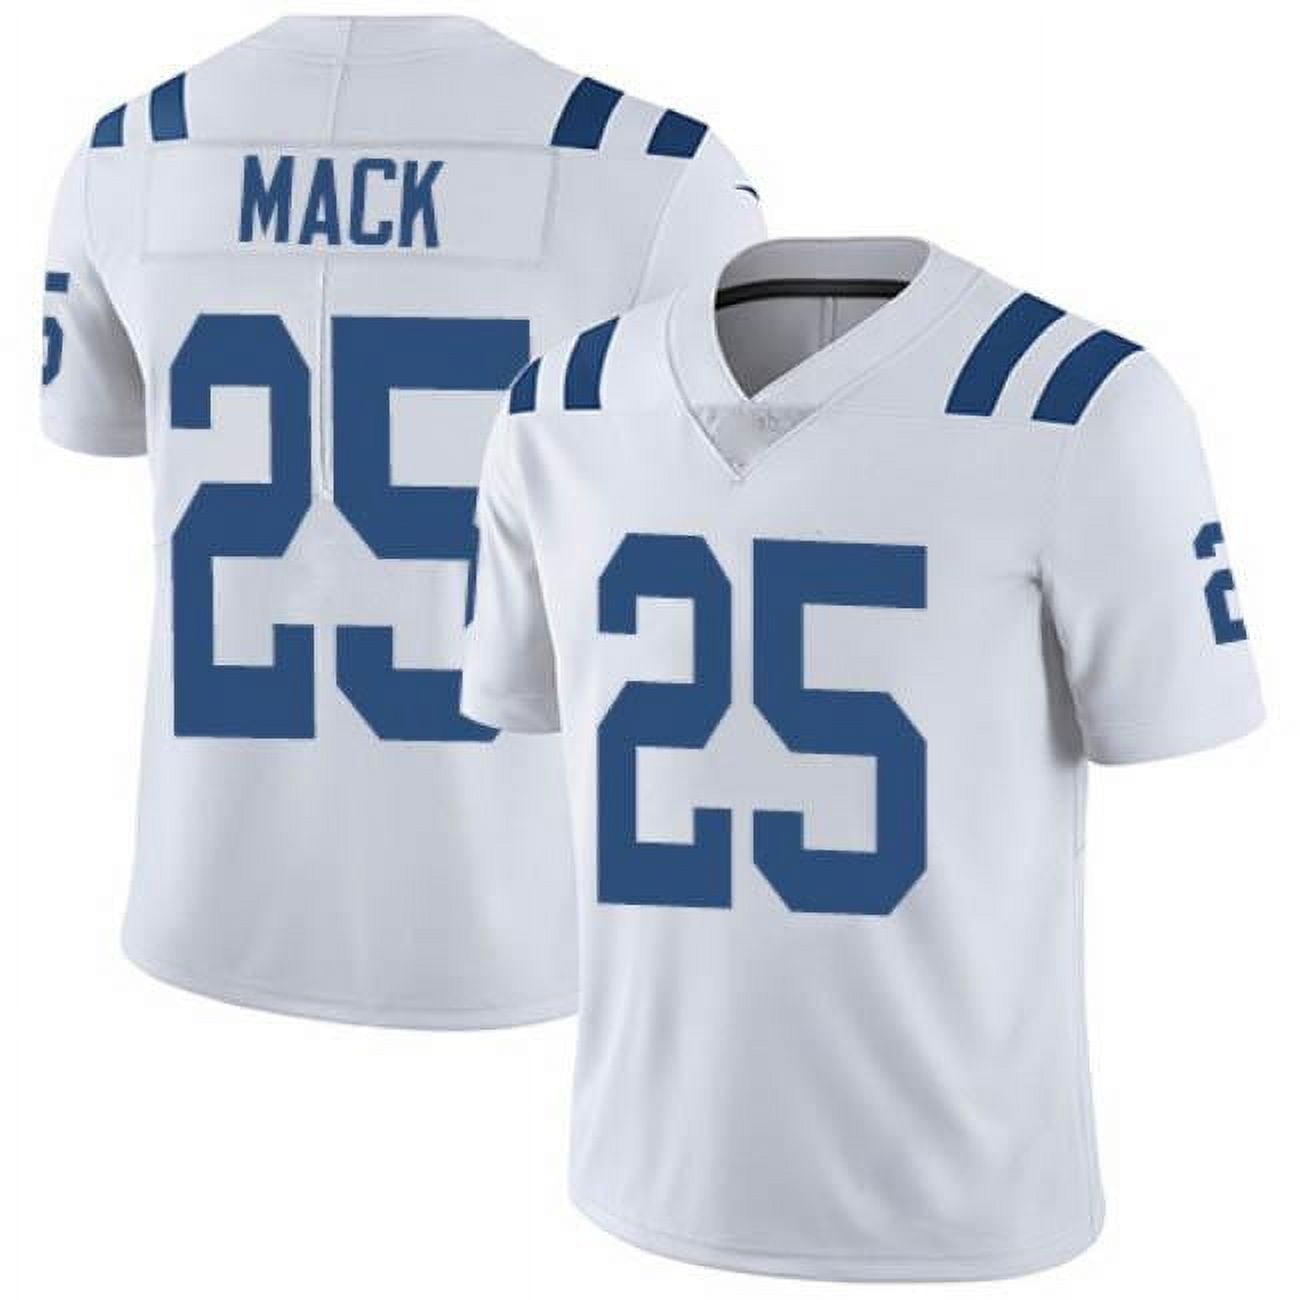 Mack Marlon jersey